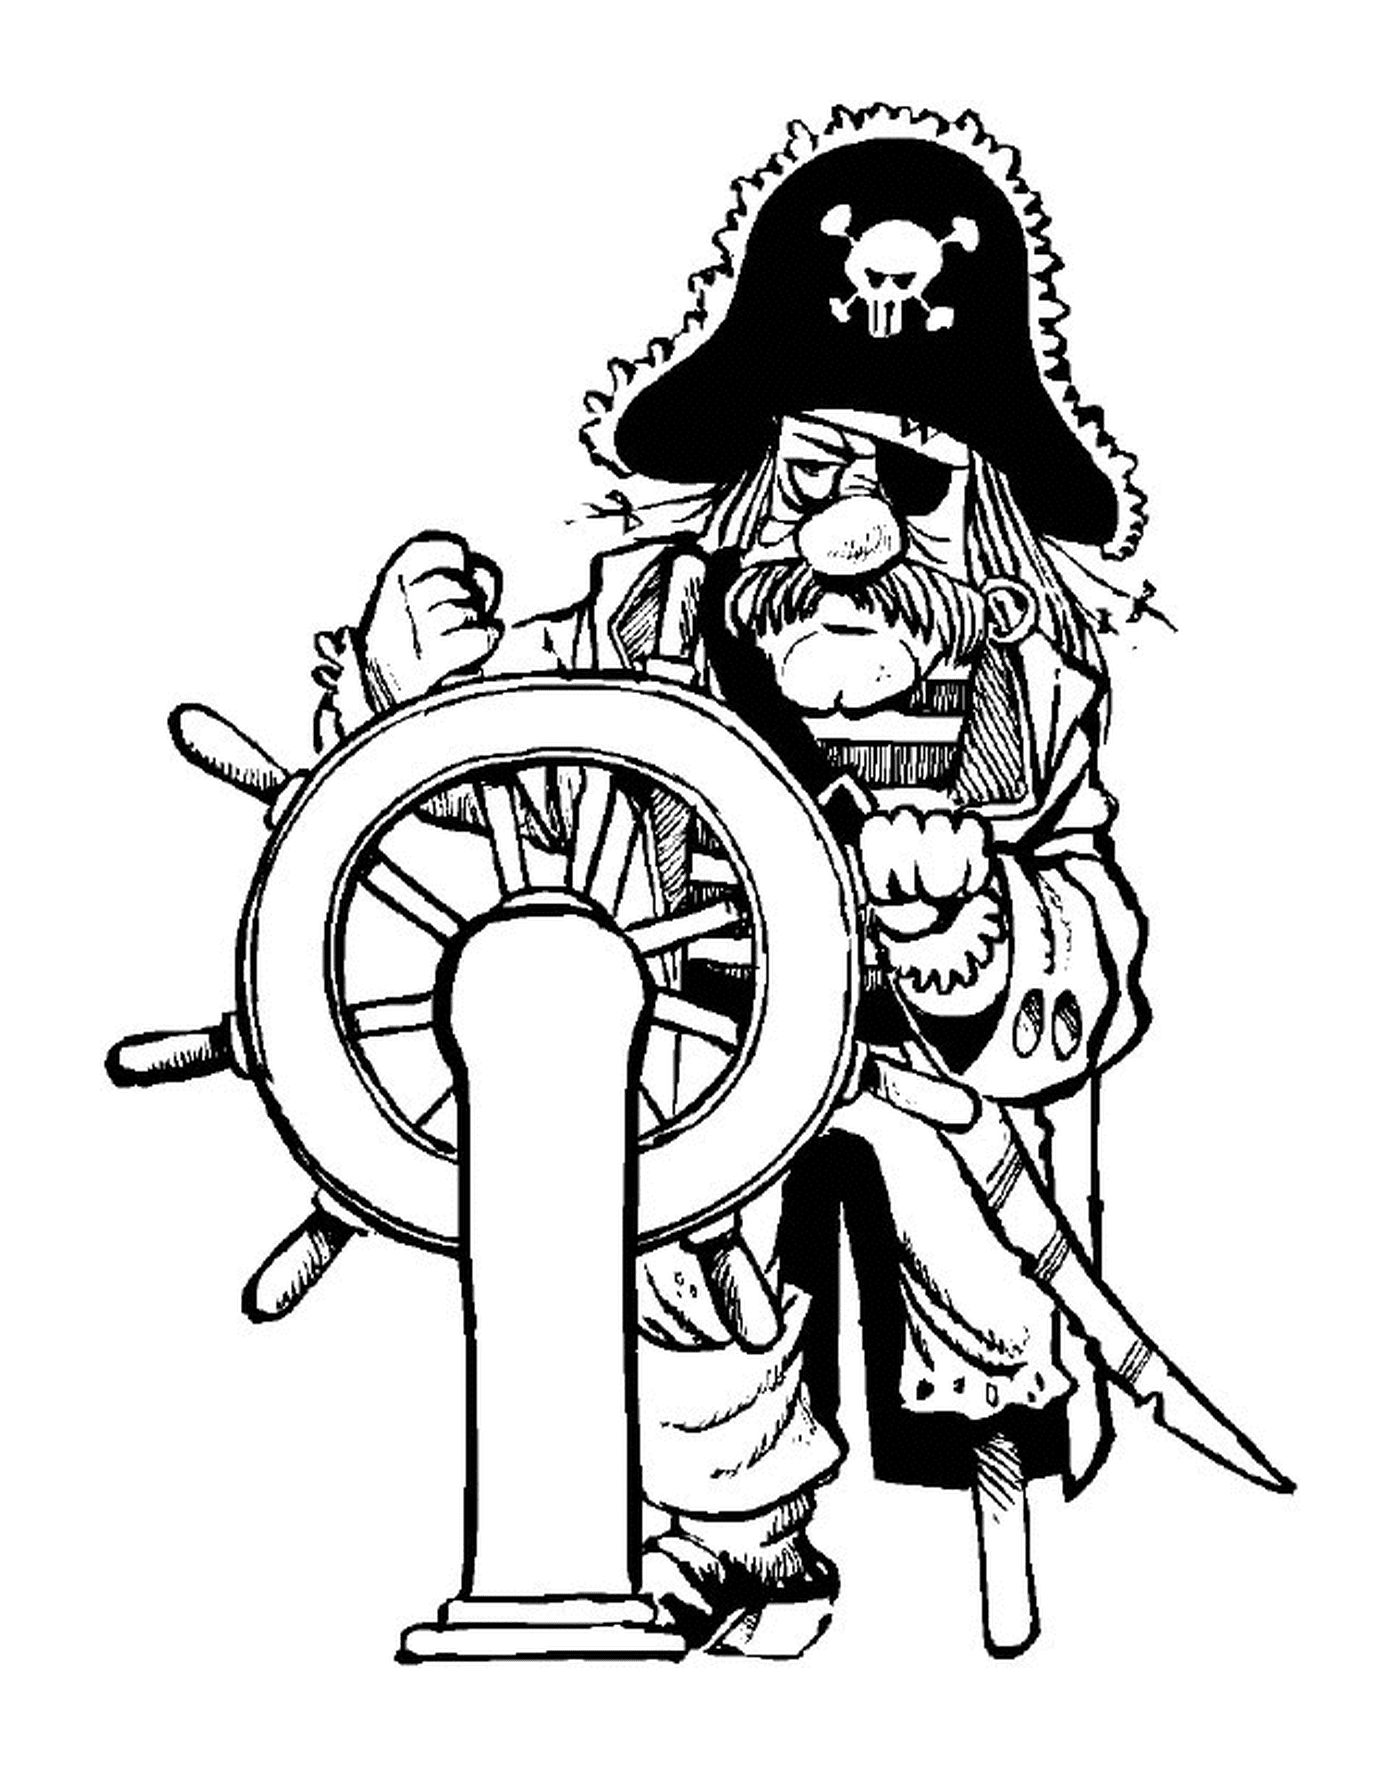  Der Piratenkapitän am Steuer 